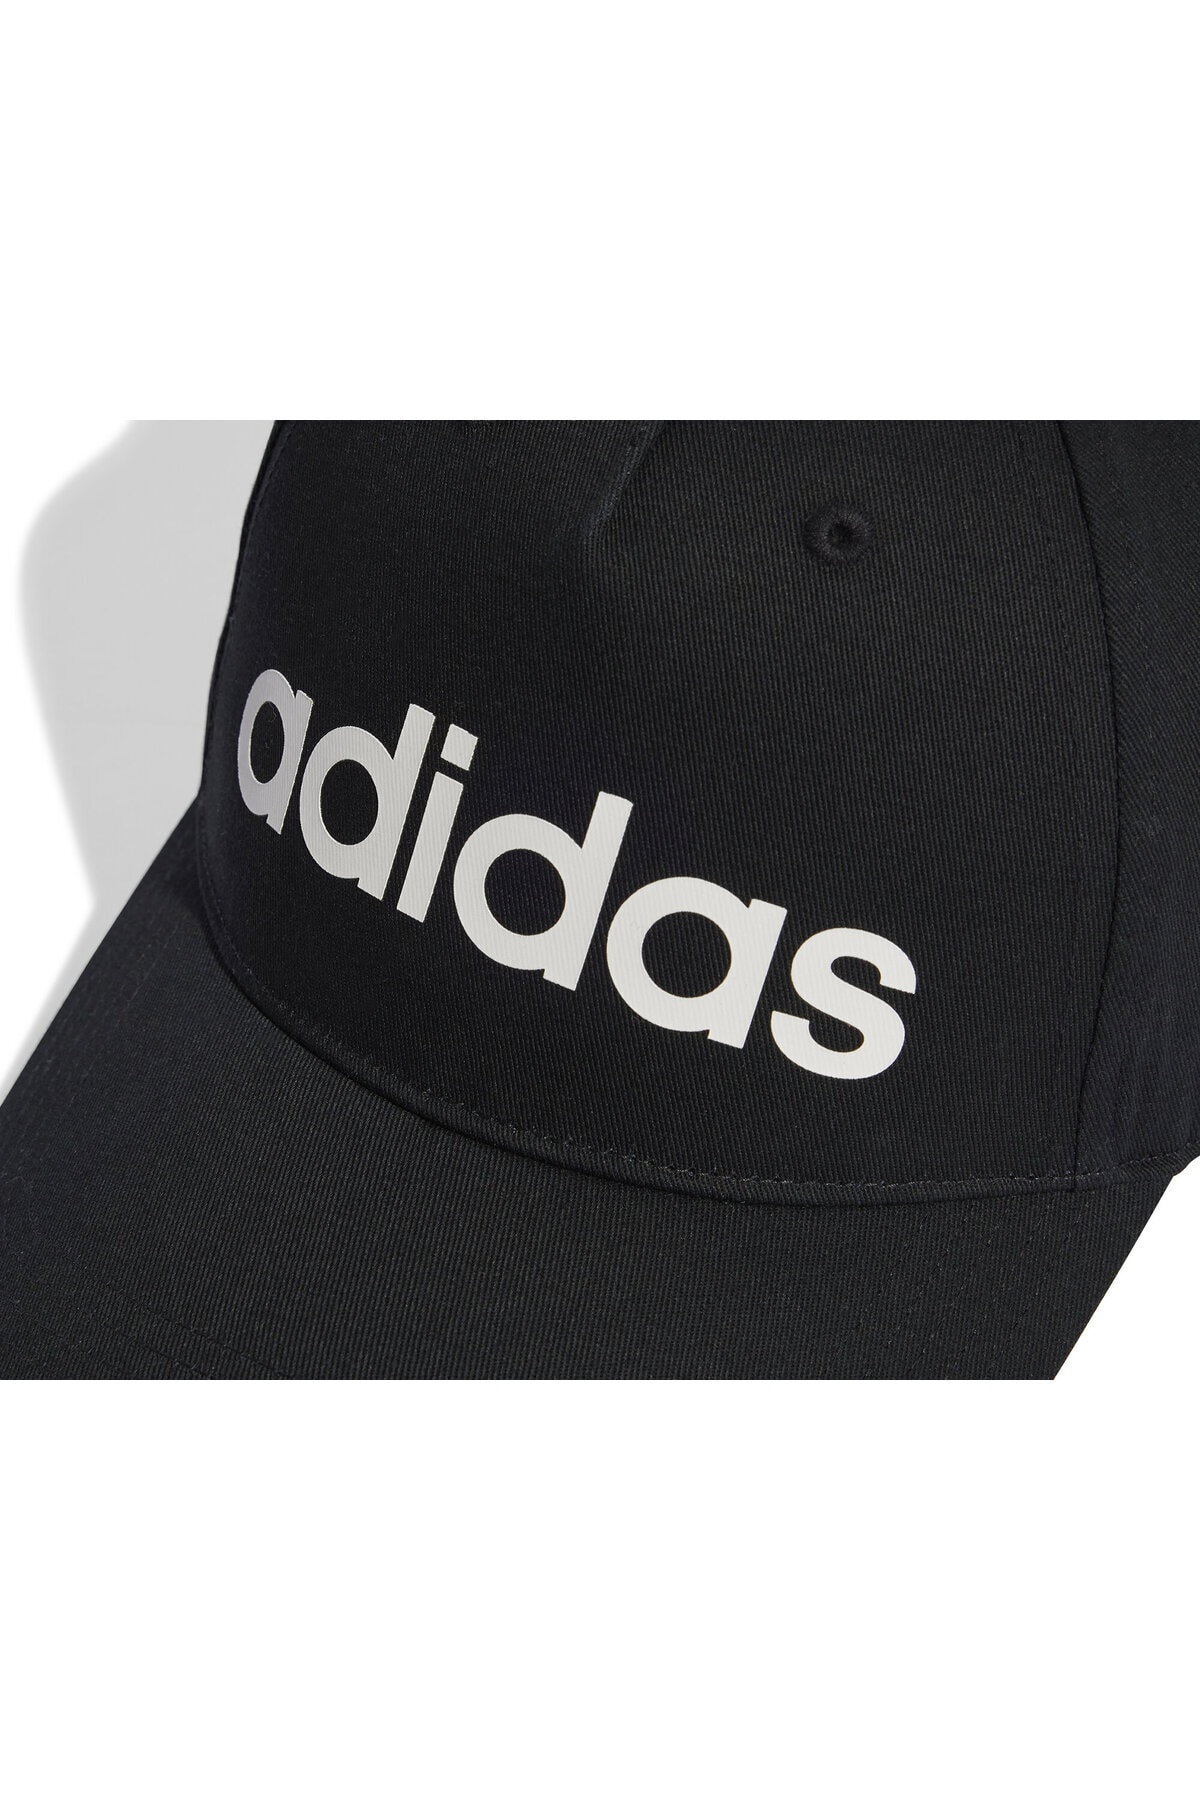 adidas کلاه Bball 3S Cap Ct FK0894 مشکی